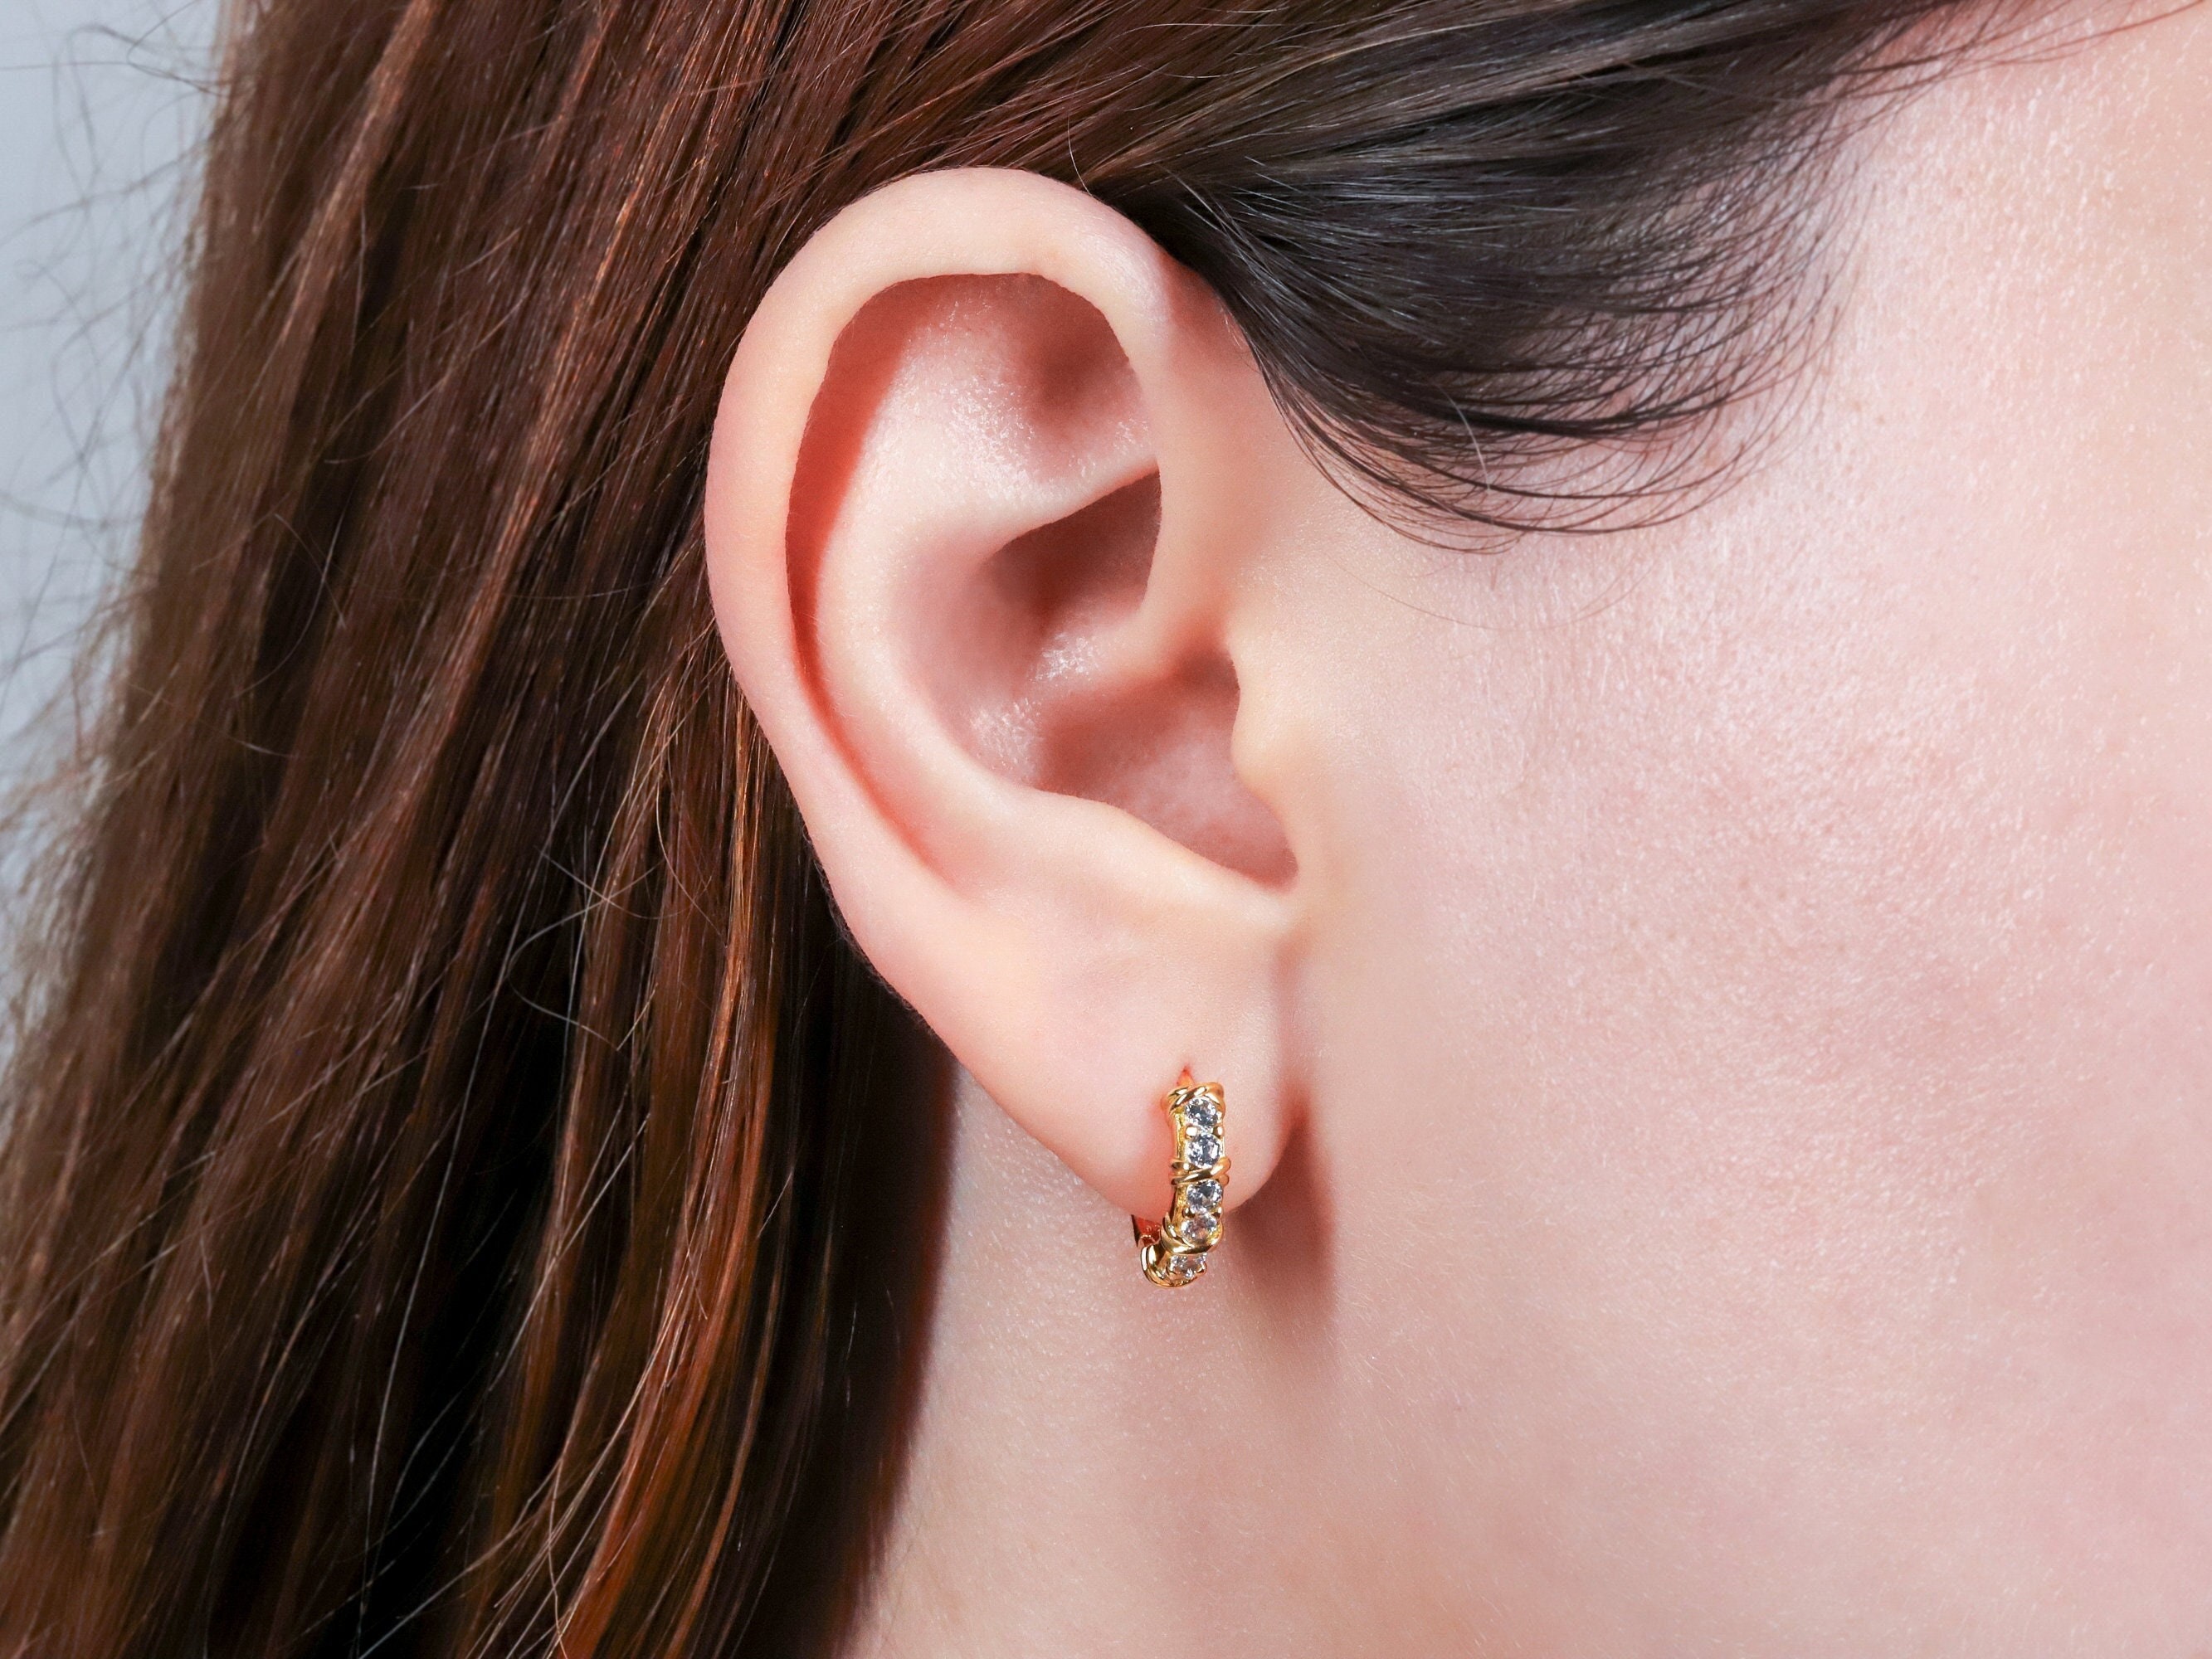  Dainty Tiny 18K Gold Huggie Hoop Earrings, 5 Pairs Mini Cubic  Zirconia Hoops Earring Set for Cartilage Helix Lobe Piercings Small Hoop  Earrings 5/6/7/8/9mm for Women or Girls: Clothing, Shoes 